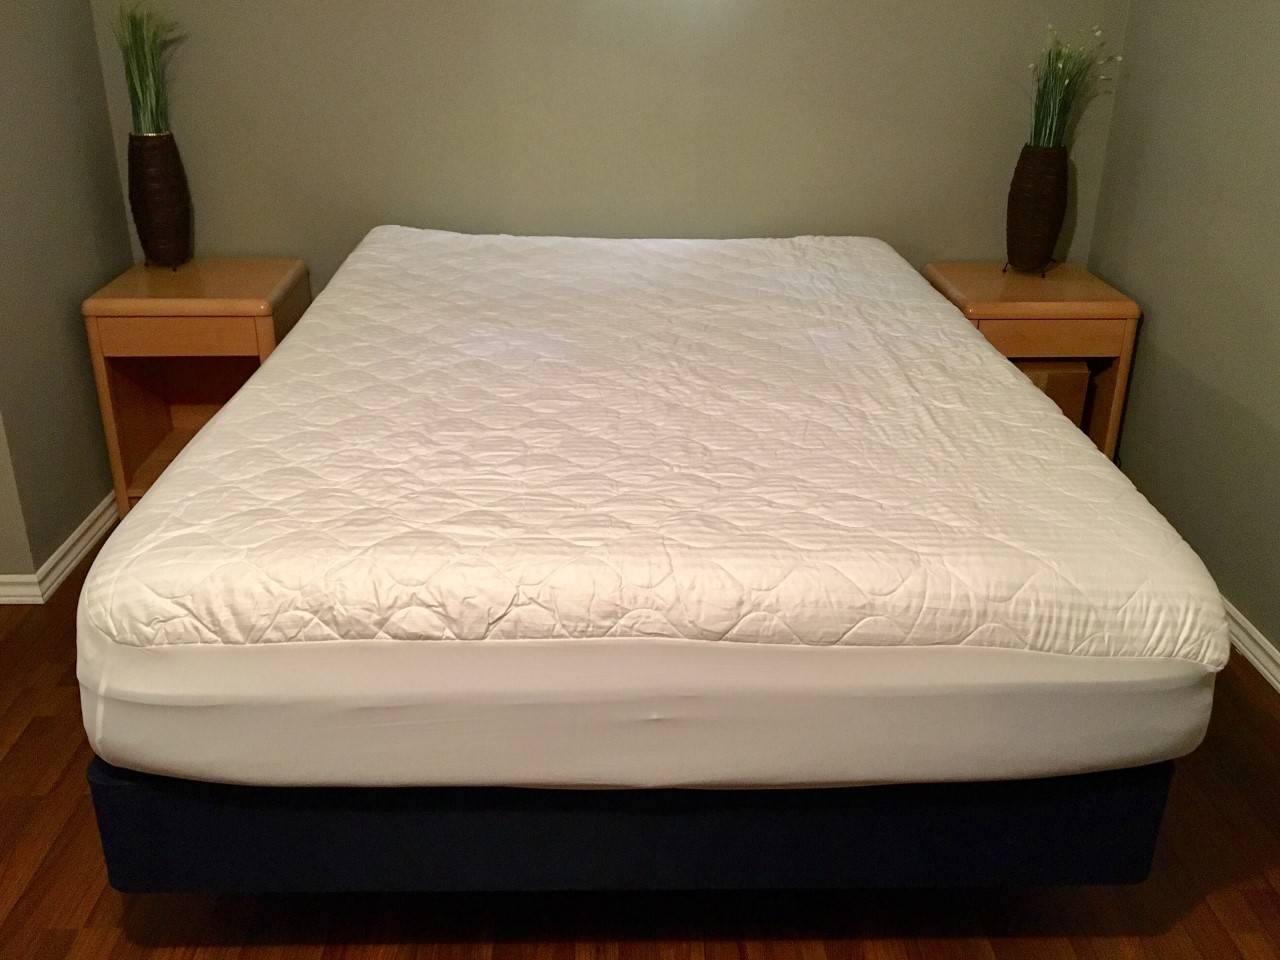 threshold mattress protector review